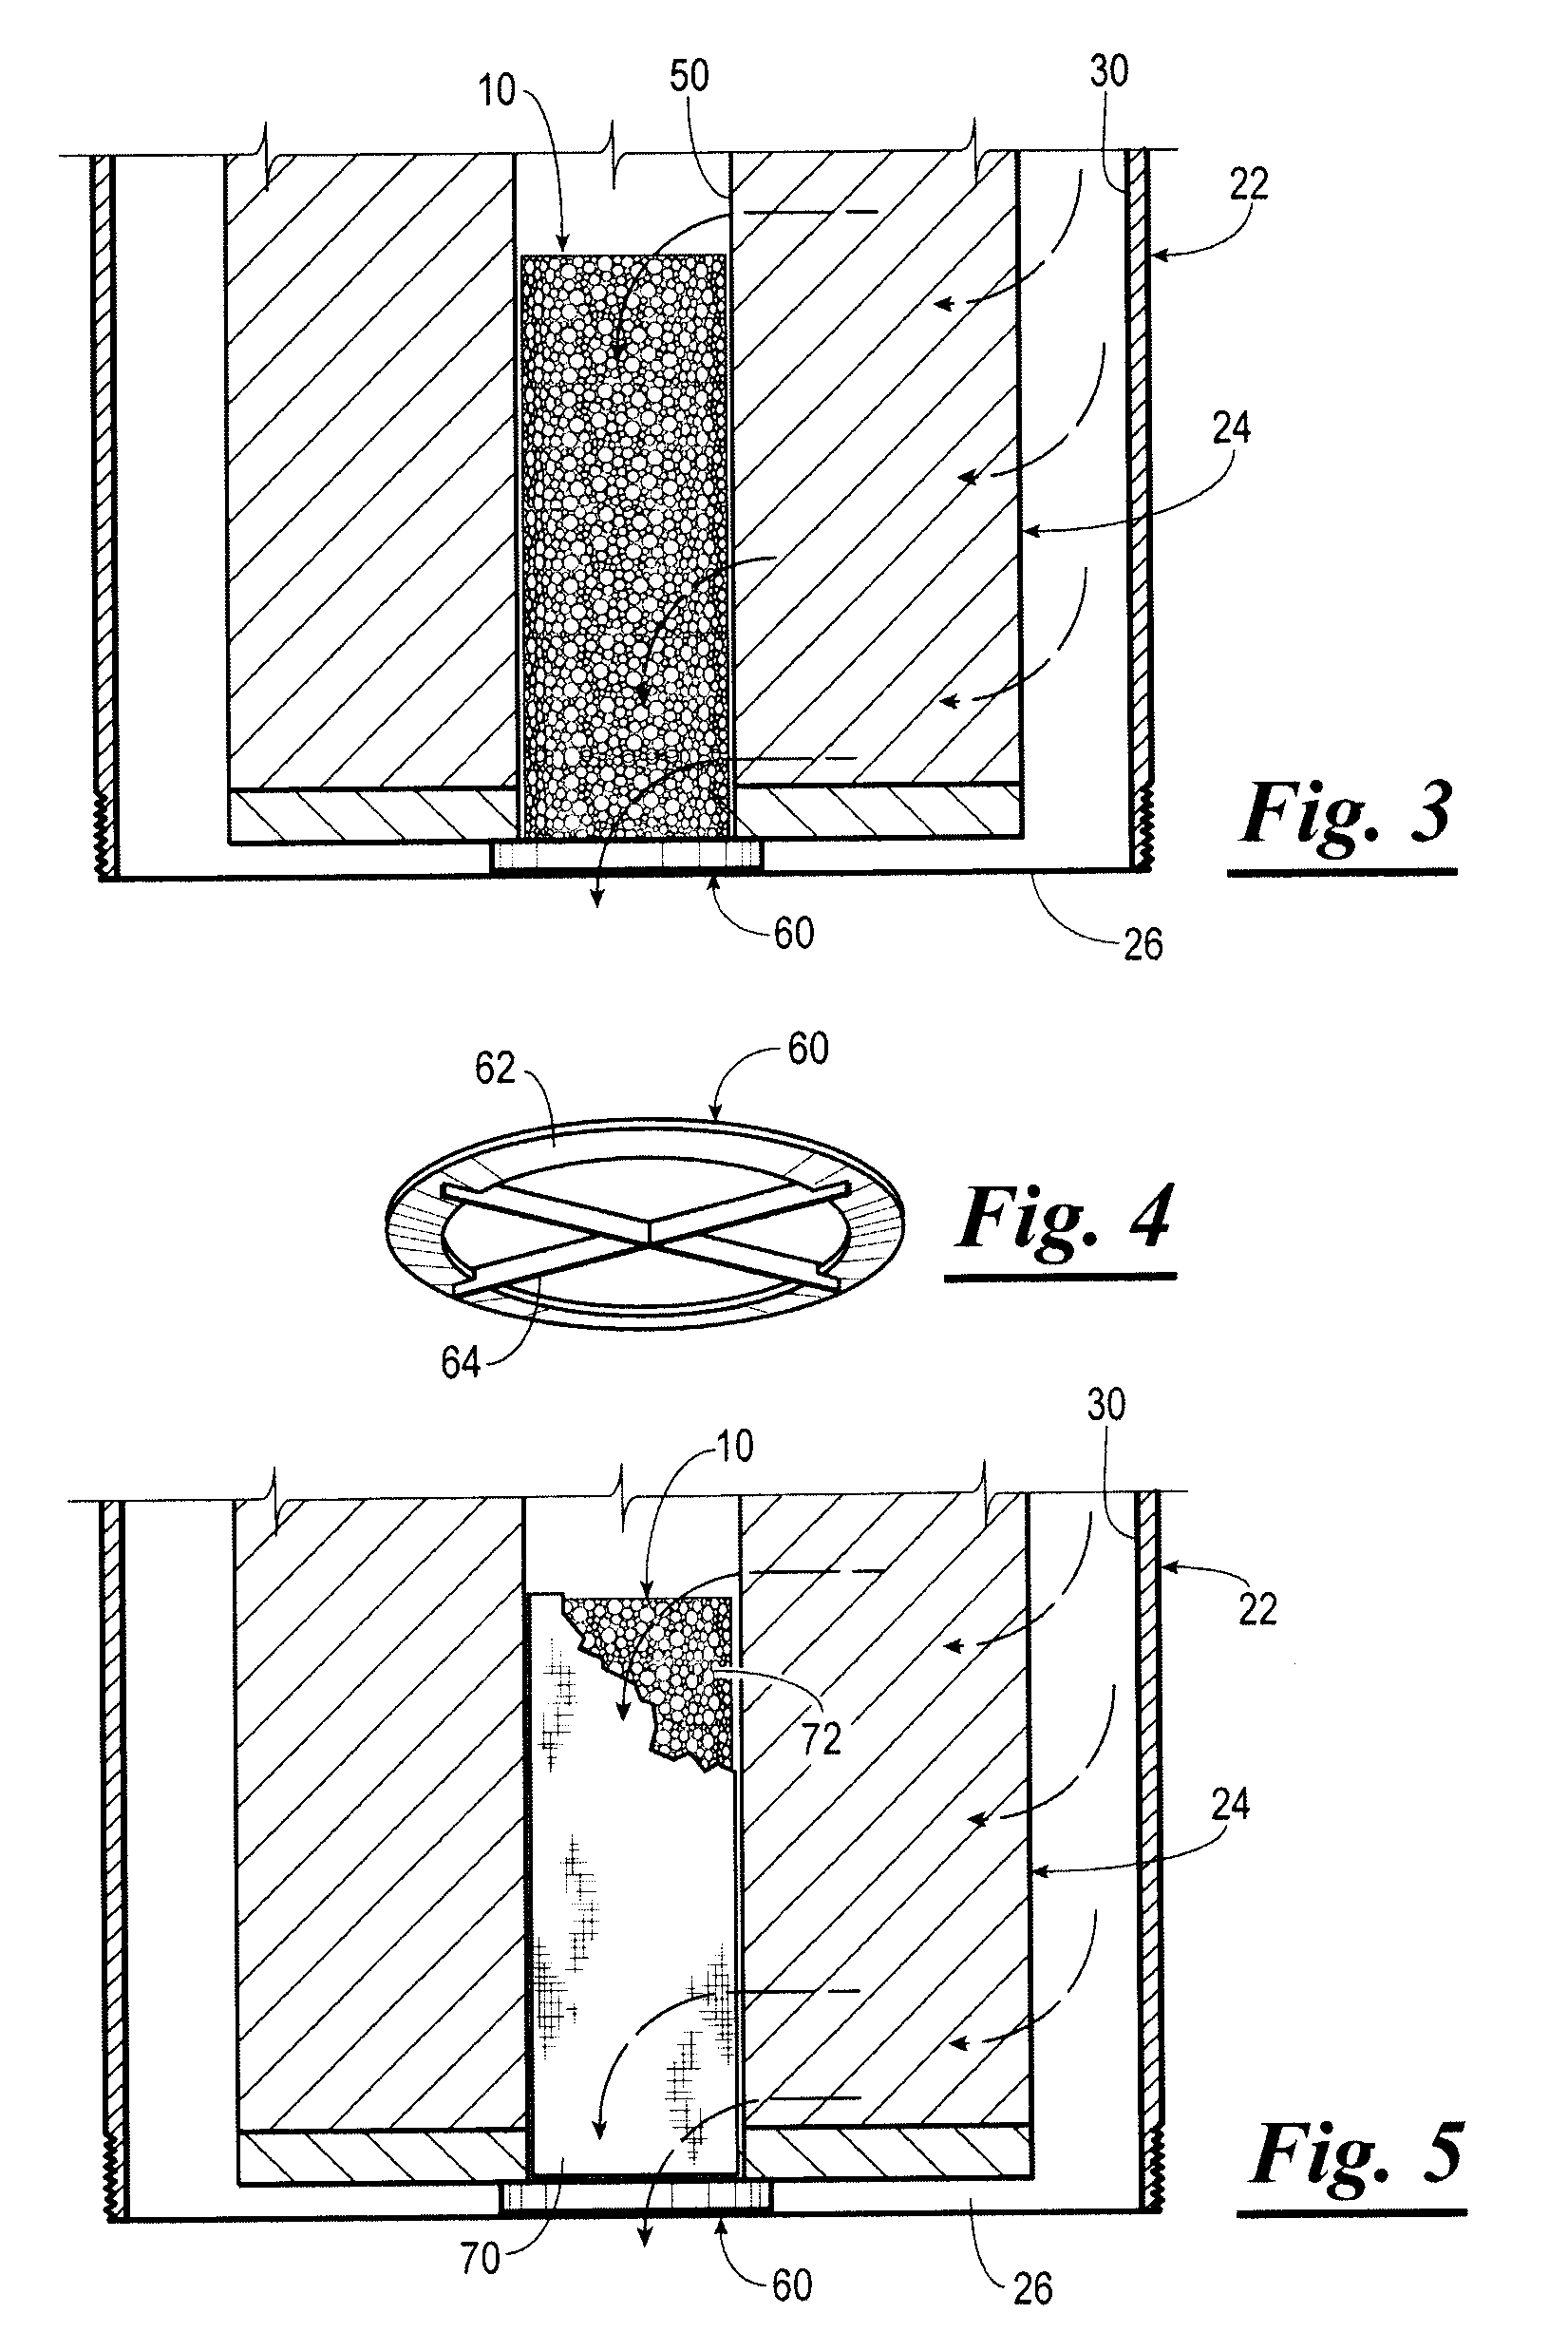 Filter cartridge containing reticulated foam fluid treatment media